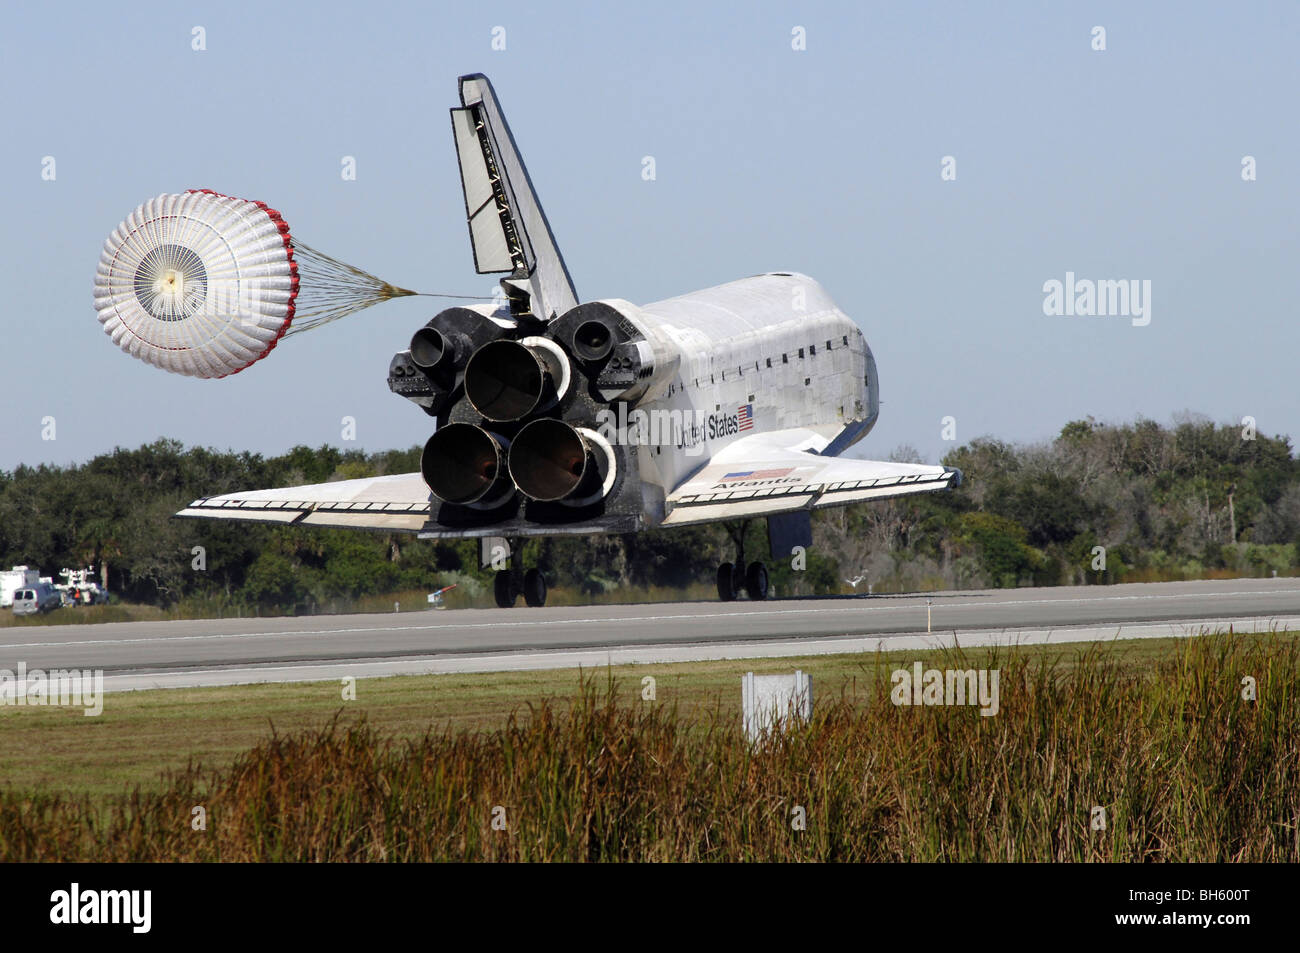 Space shuttle Atlantis unfurls its drag chute upon landing at Kennedy Space Center, Florida. Stock Photo